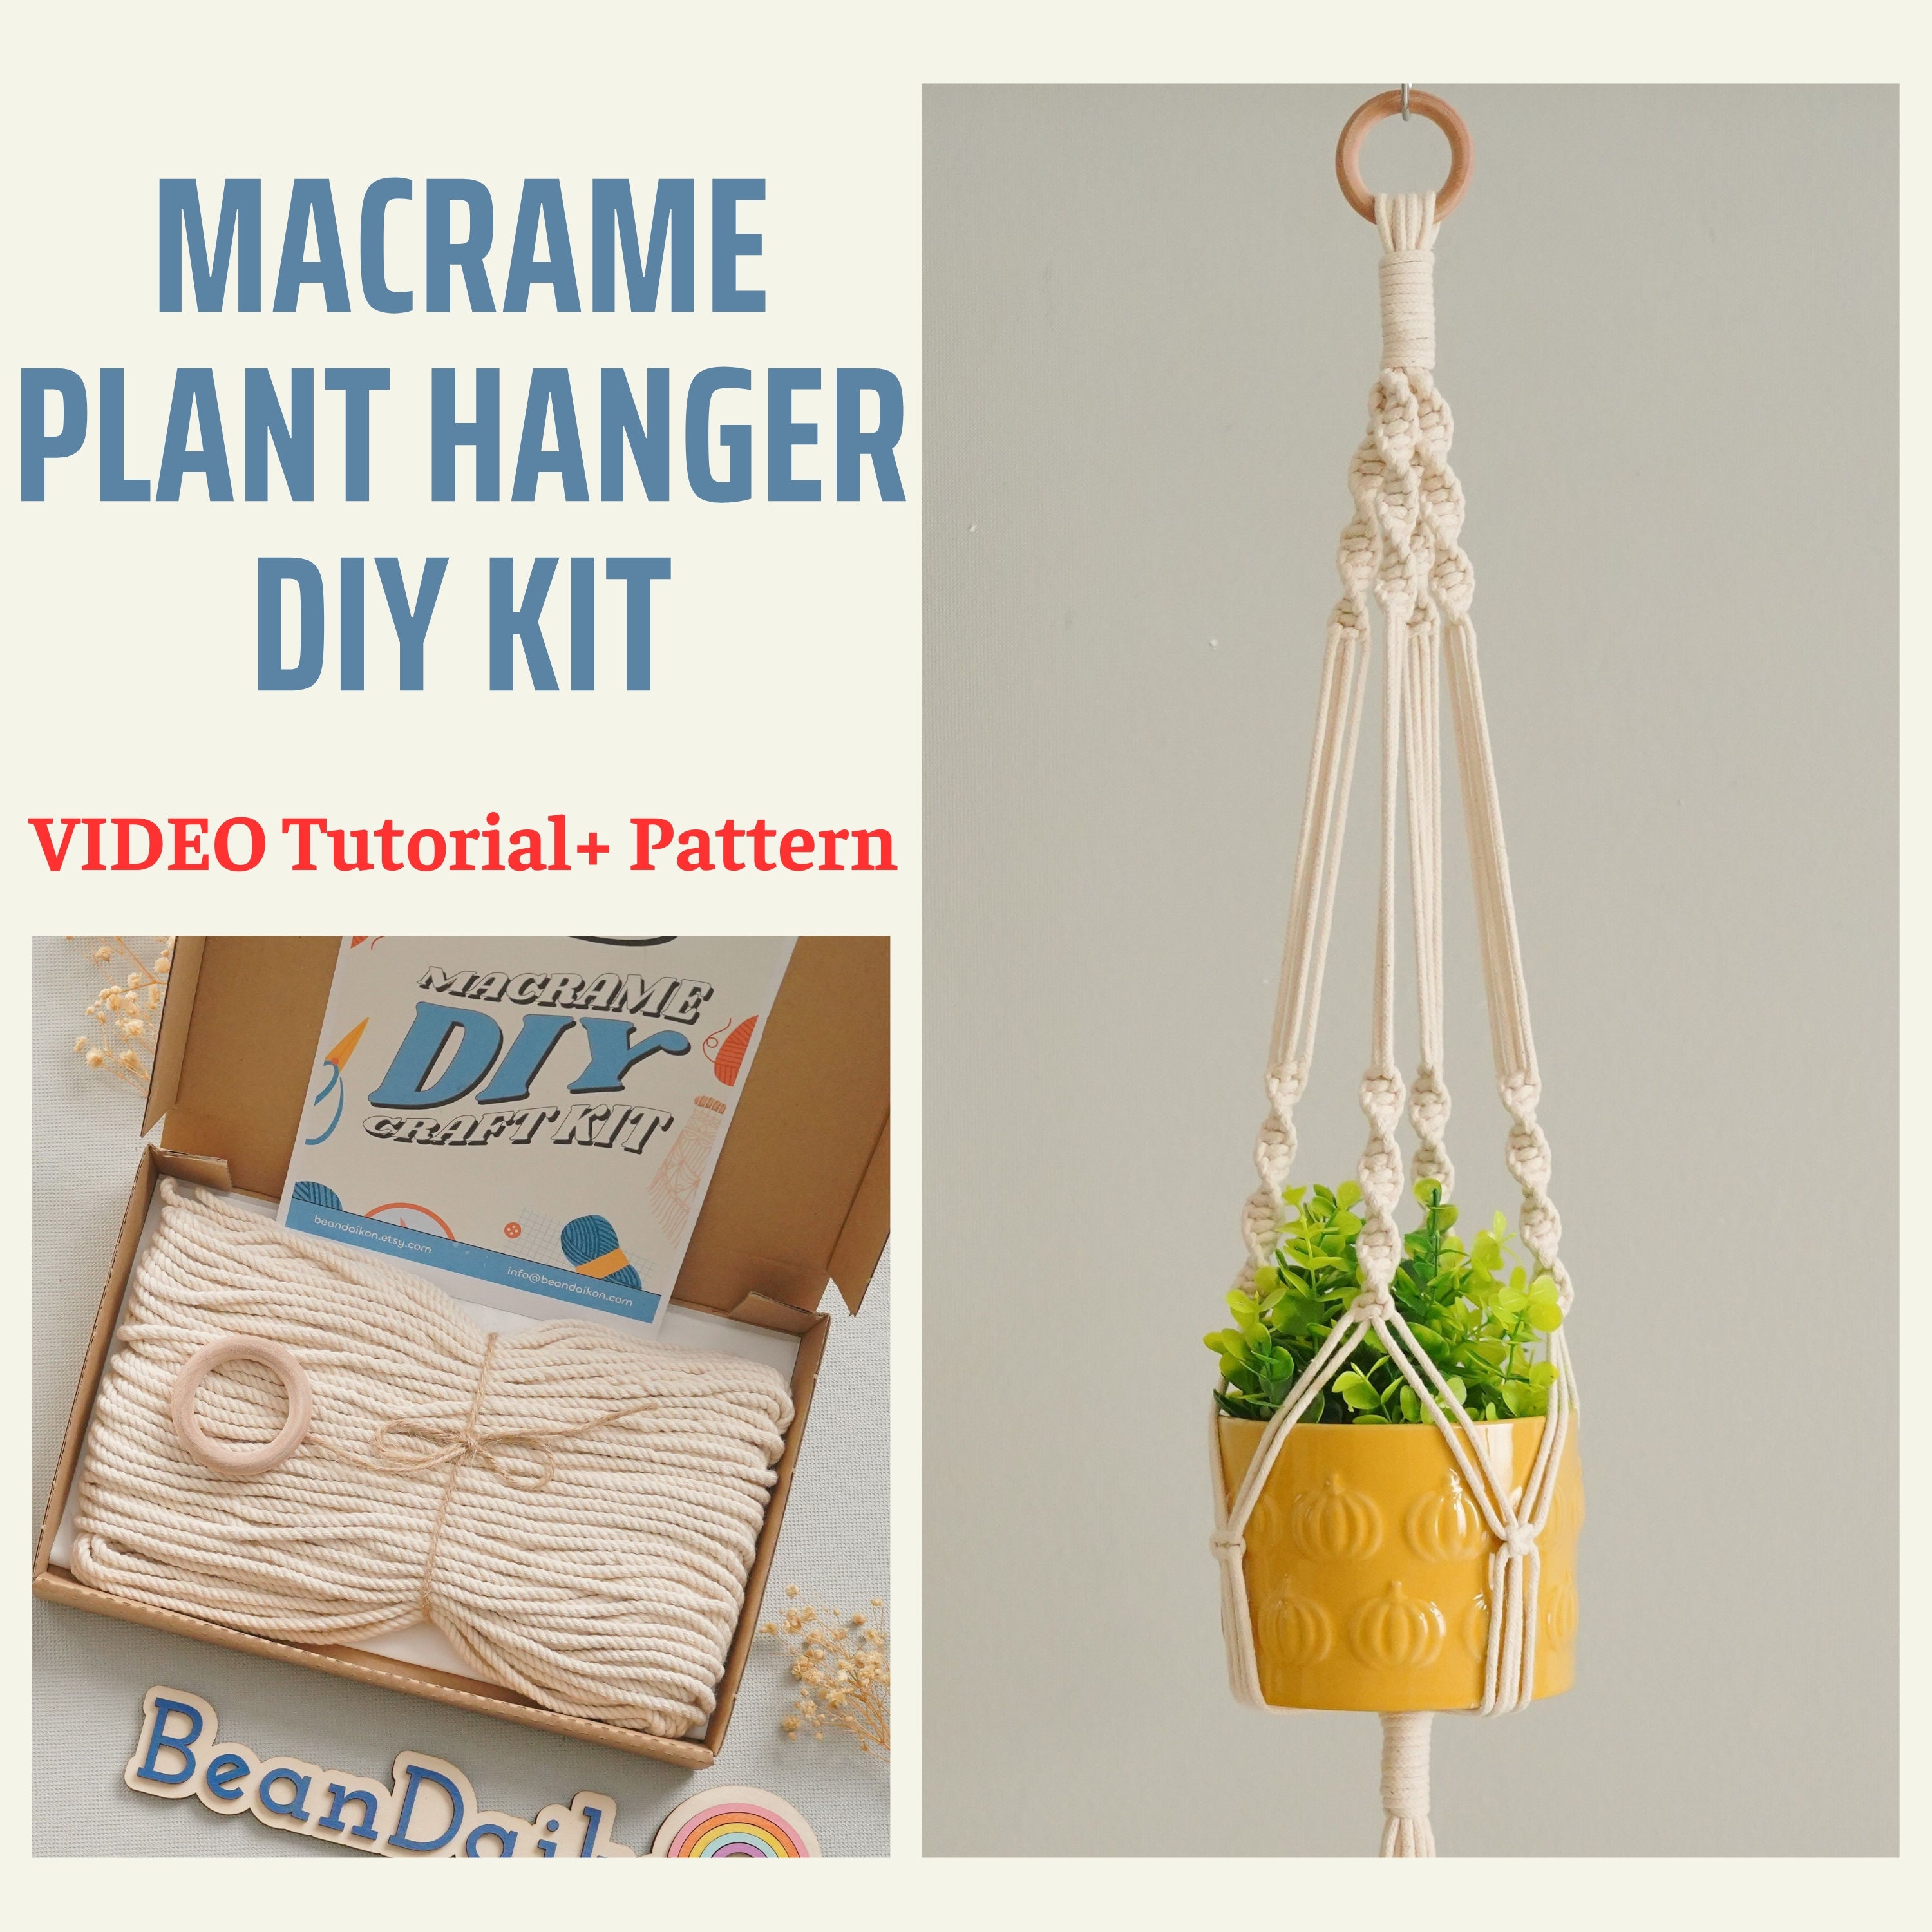 Migo Creates Macrame Kits for Adults Beginners: DIY Macrame Kit with 220 Yards Macrame Cord and 58pcs Macrame Supplies. E-Book Tutorial for 5